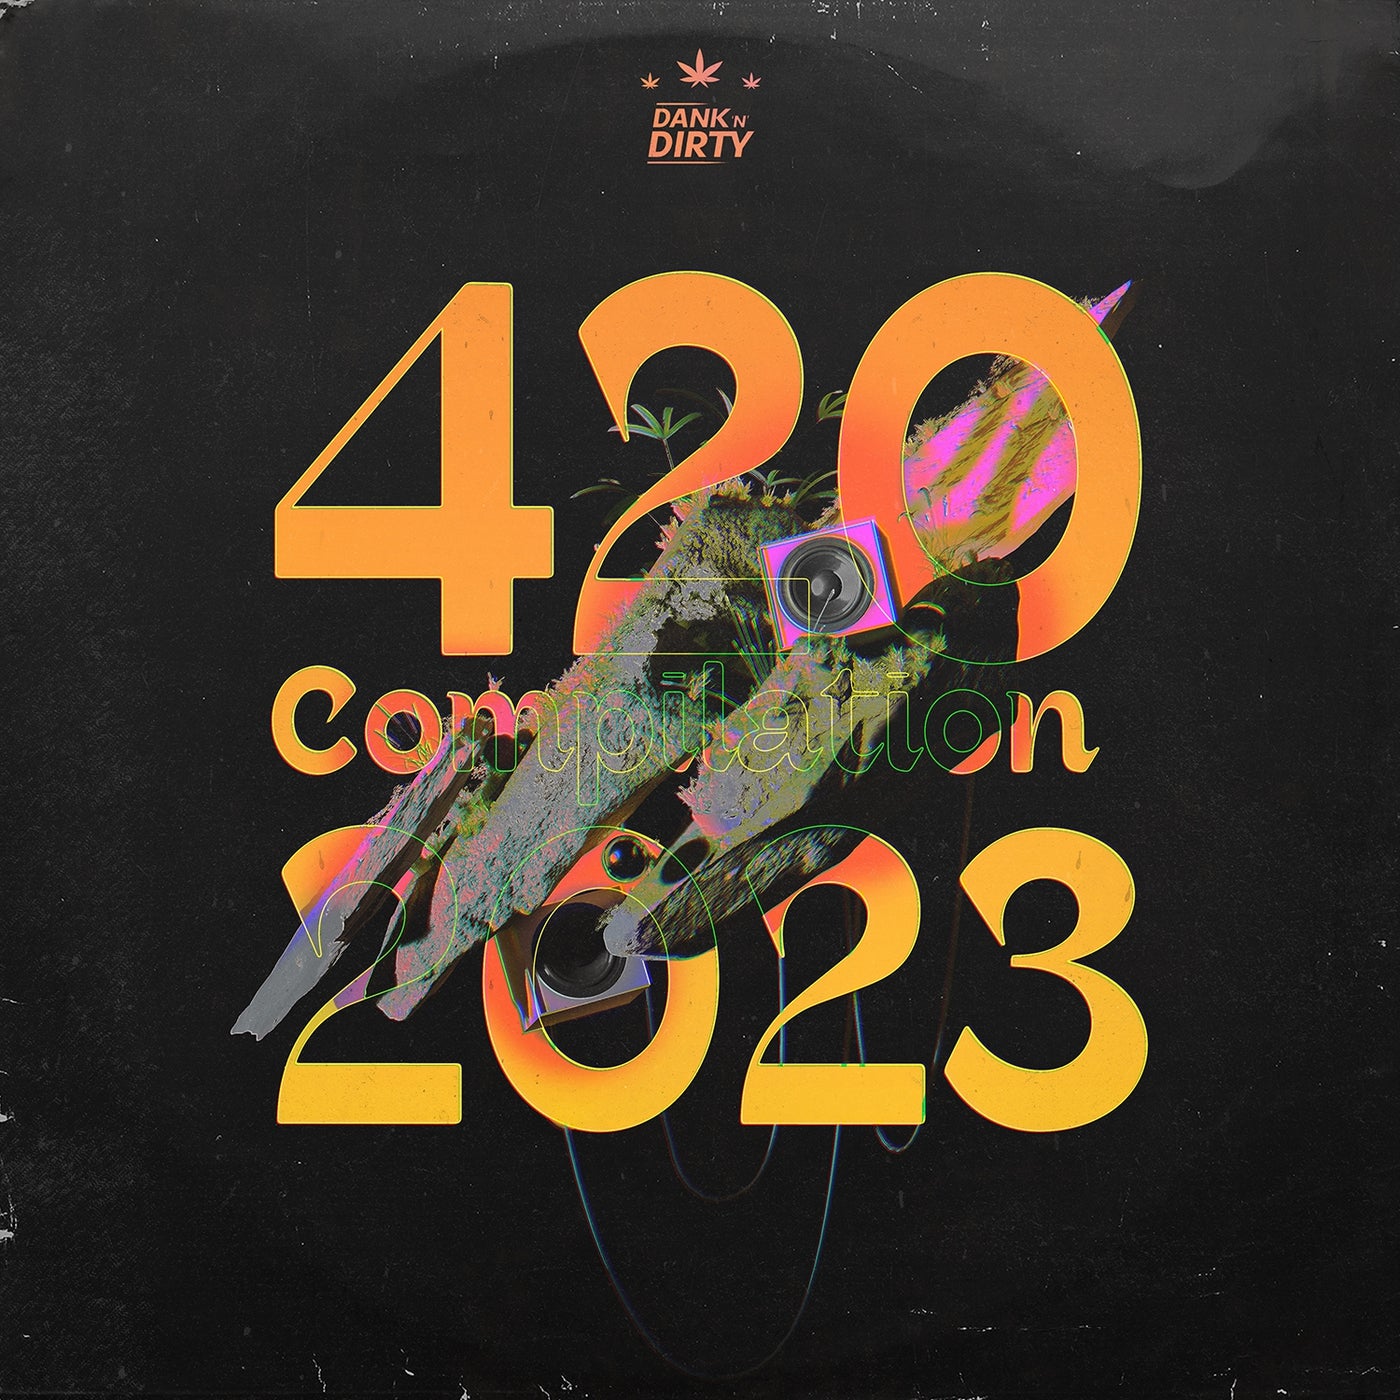 Dank 'n' Dirty Dubz 4/20 Compilation (2023)